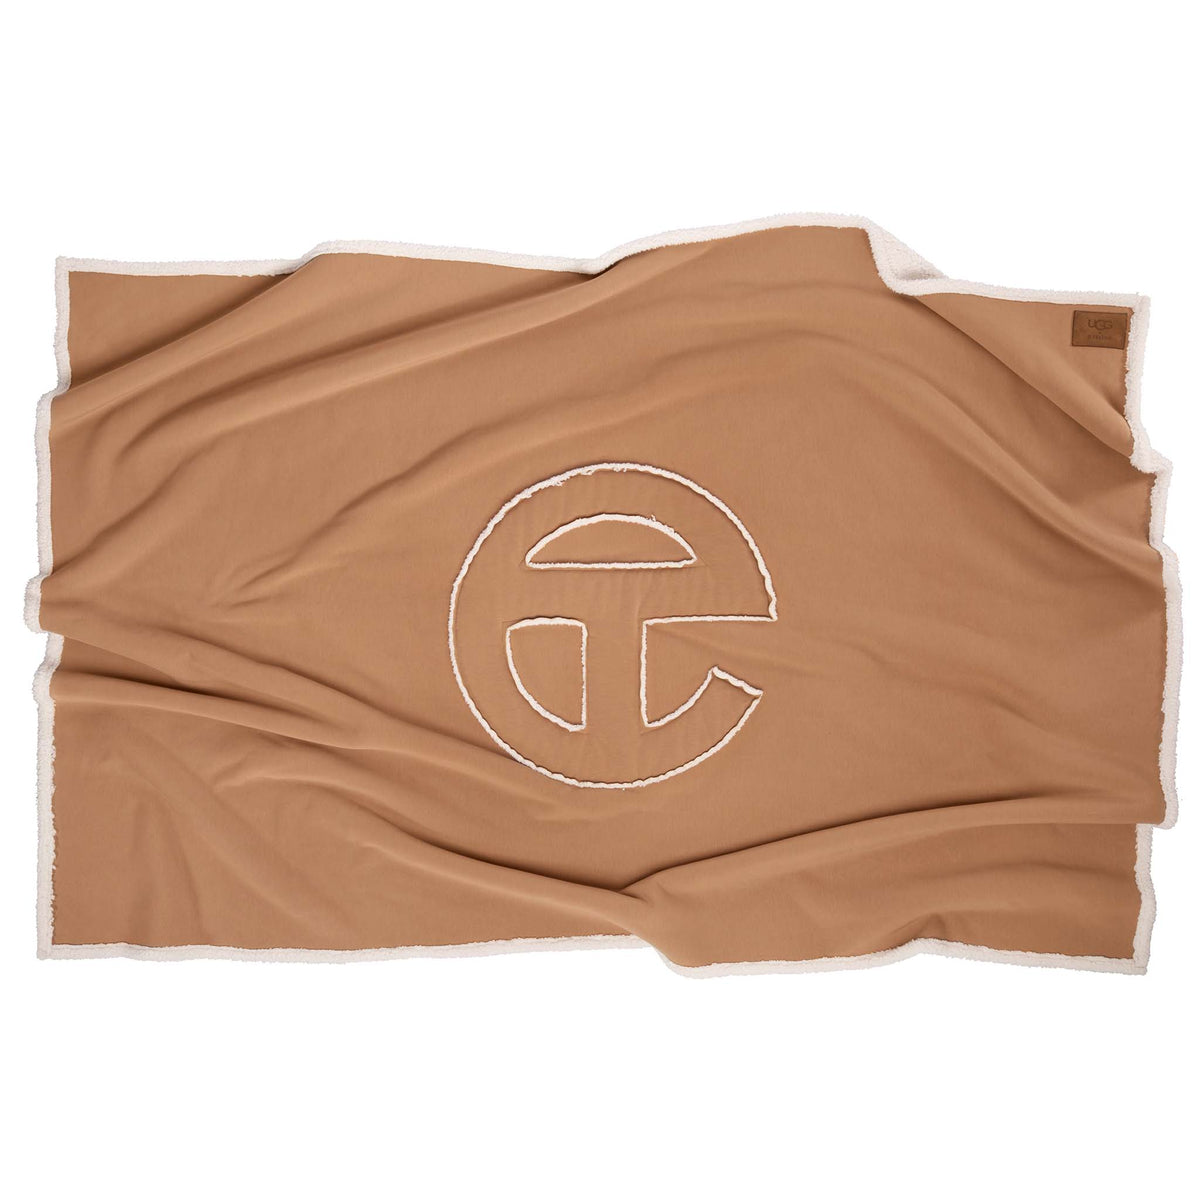 UGG x TELFAR Throw Blanket - Chestnut